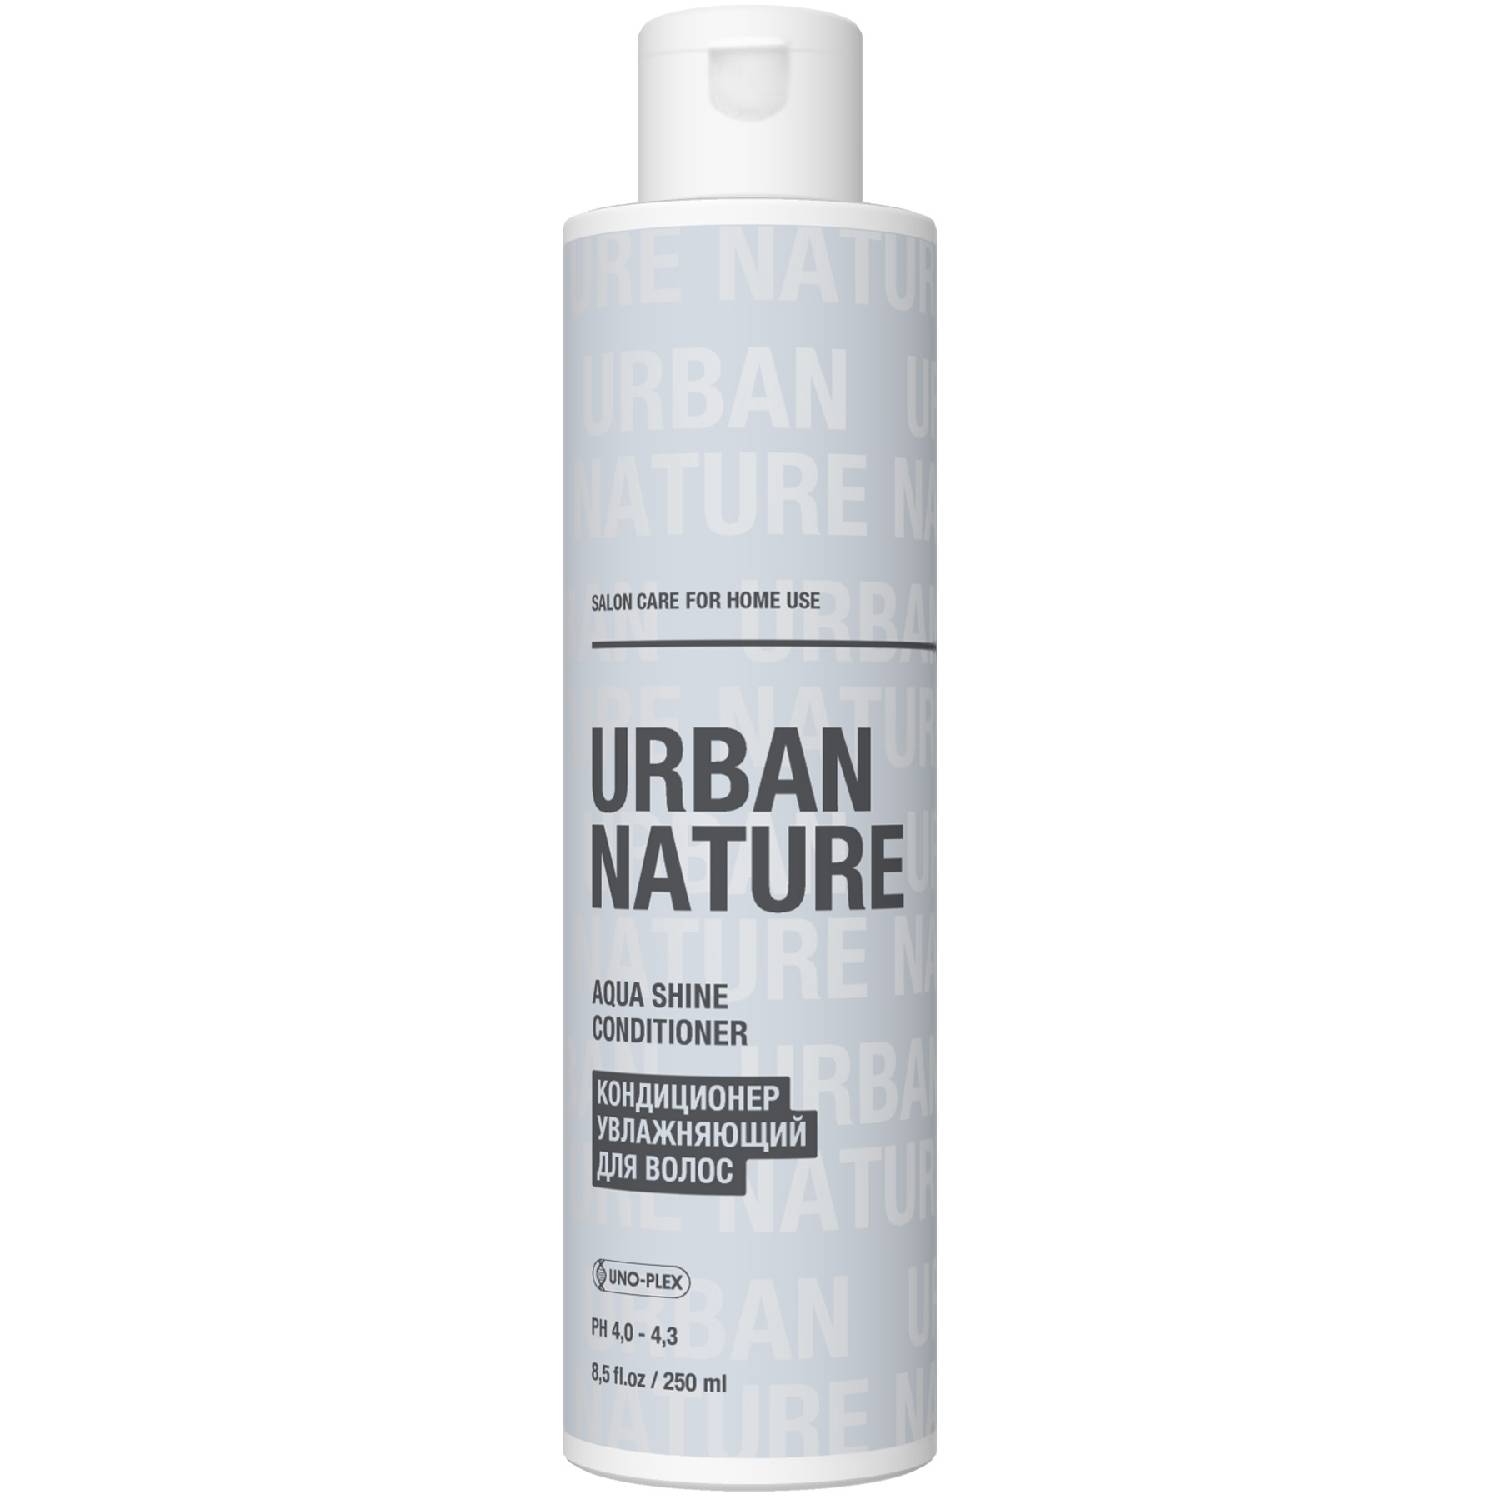 Urban Nature Увлажняющий кондиционер для волос, 250 мл (Urban Nature, Aqua Shine)